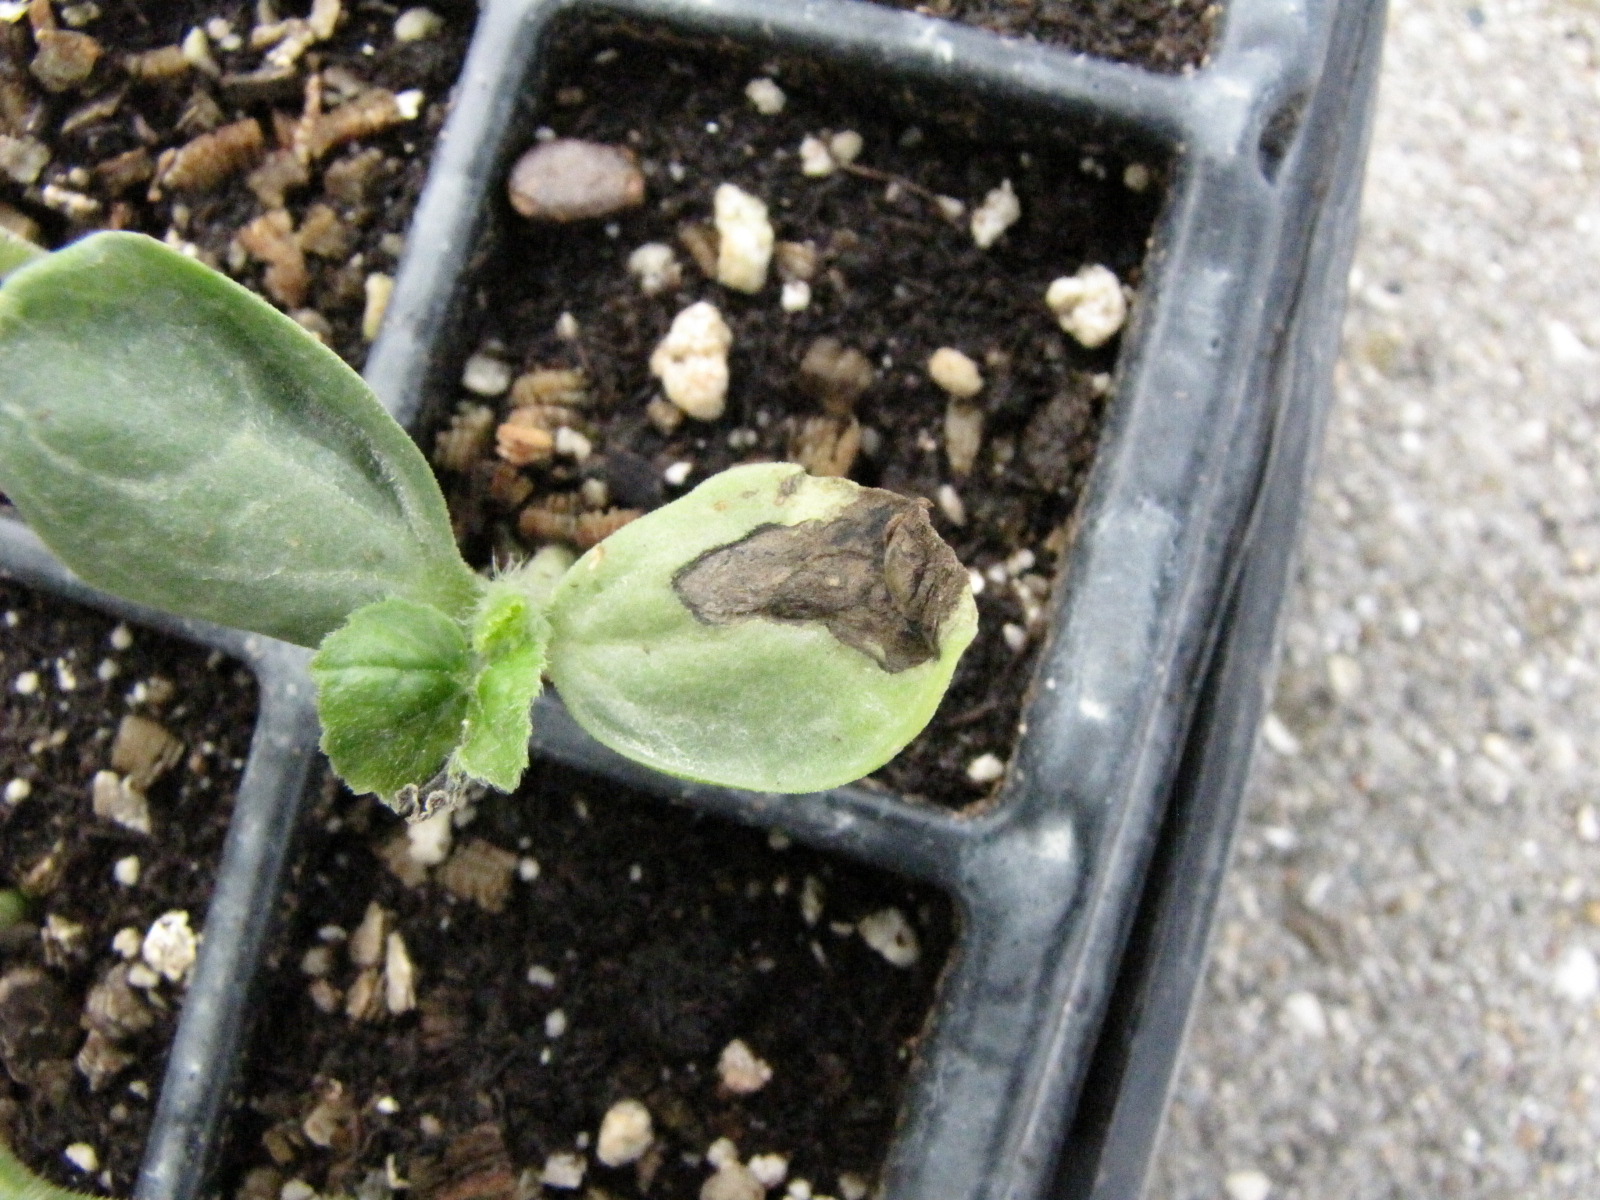 Angular leaf spot on watermelon leaf has caused dark, necrotic lesion on cotyledon.